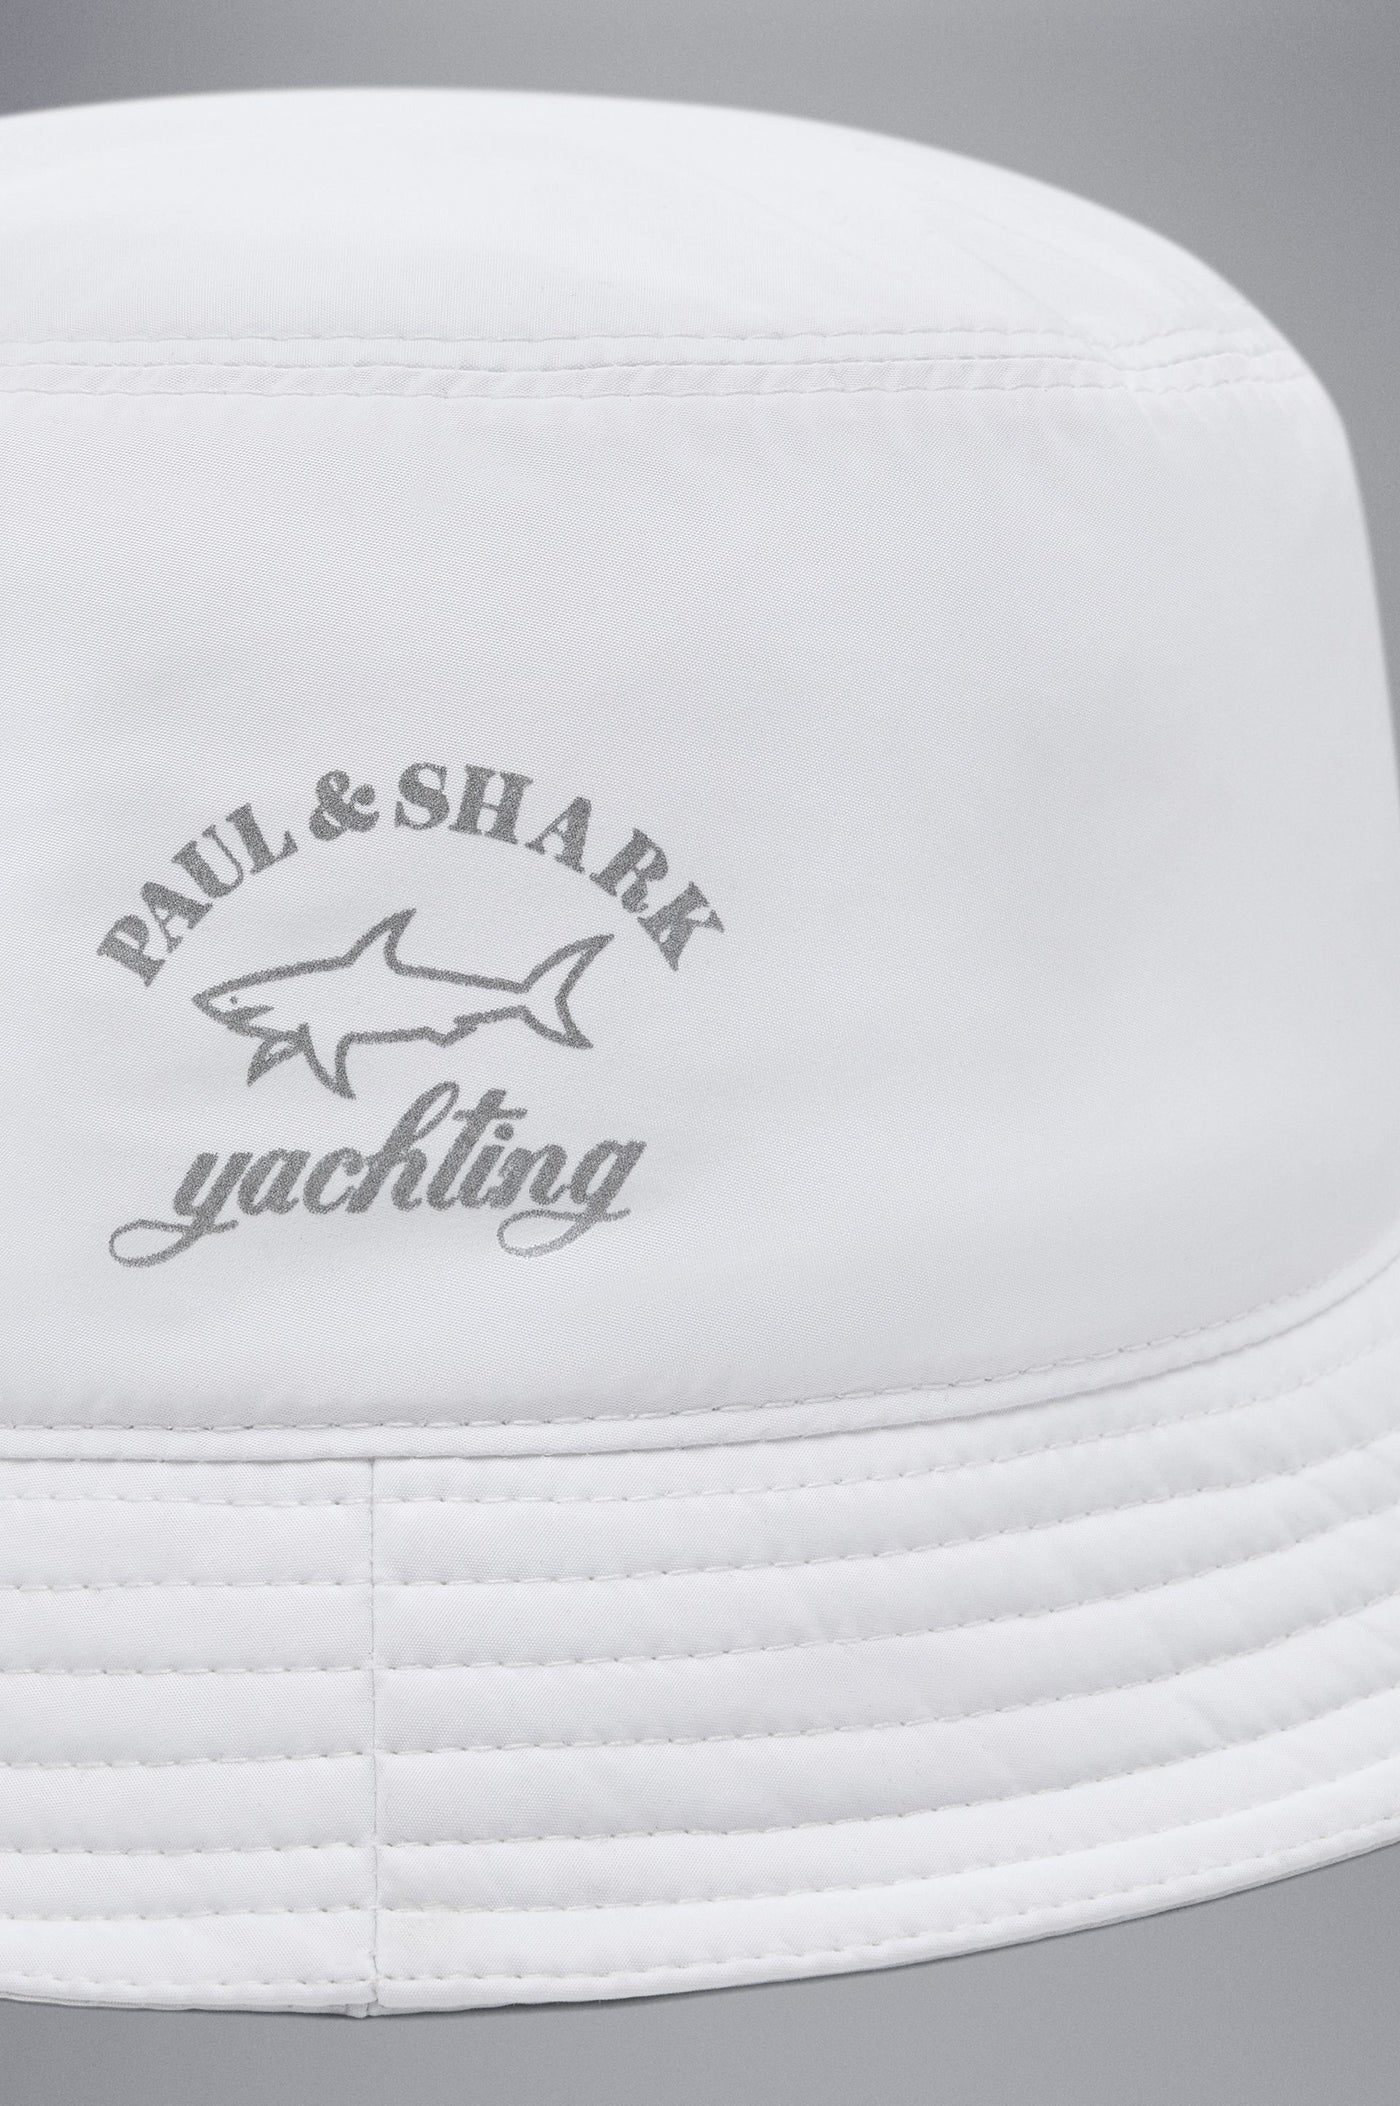 Paul & Shark Στρογγυλό Καπέλο Bucket | Λευκό